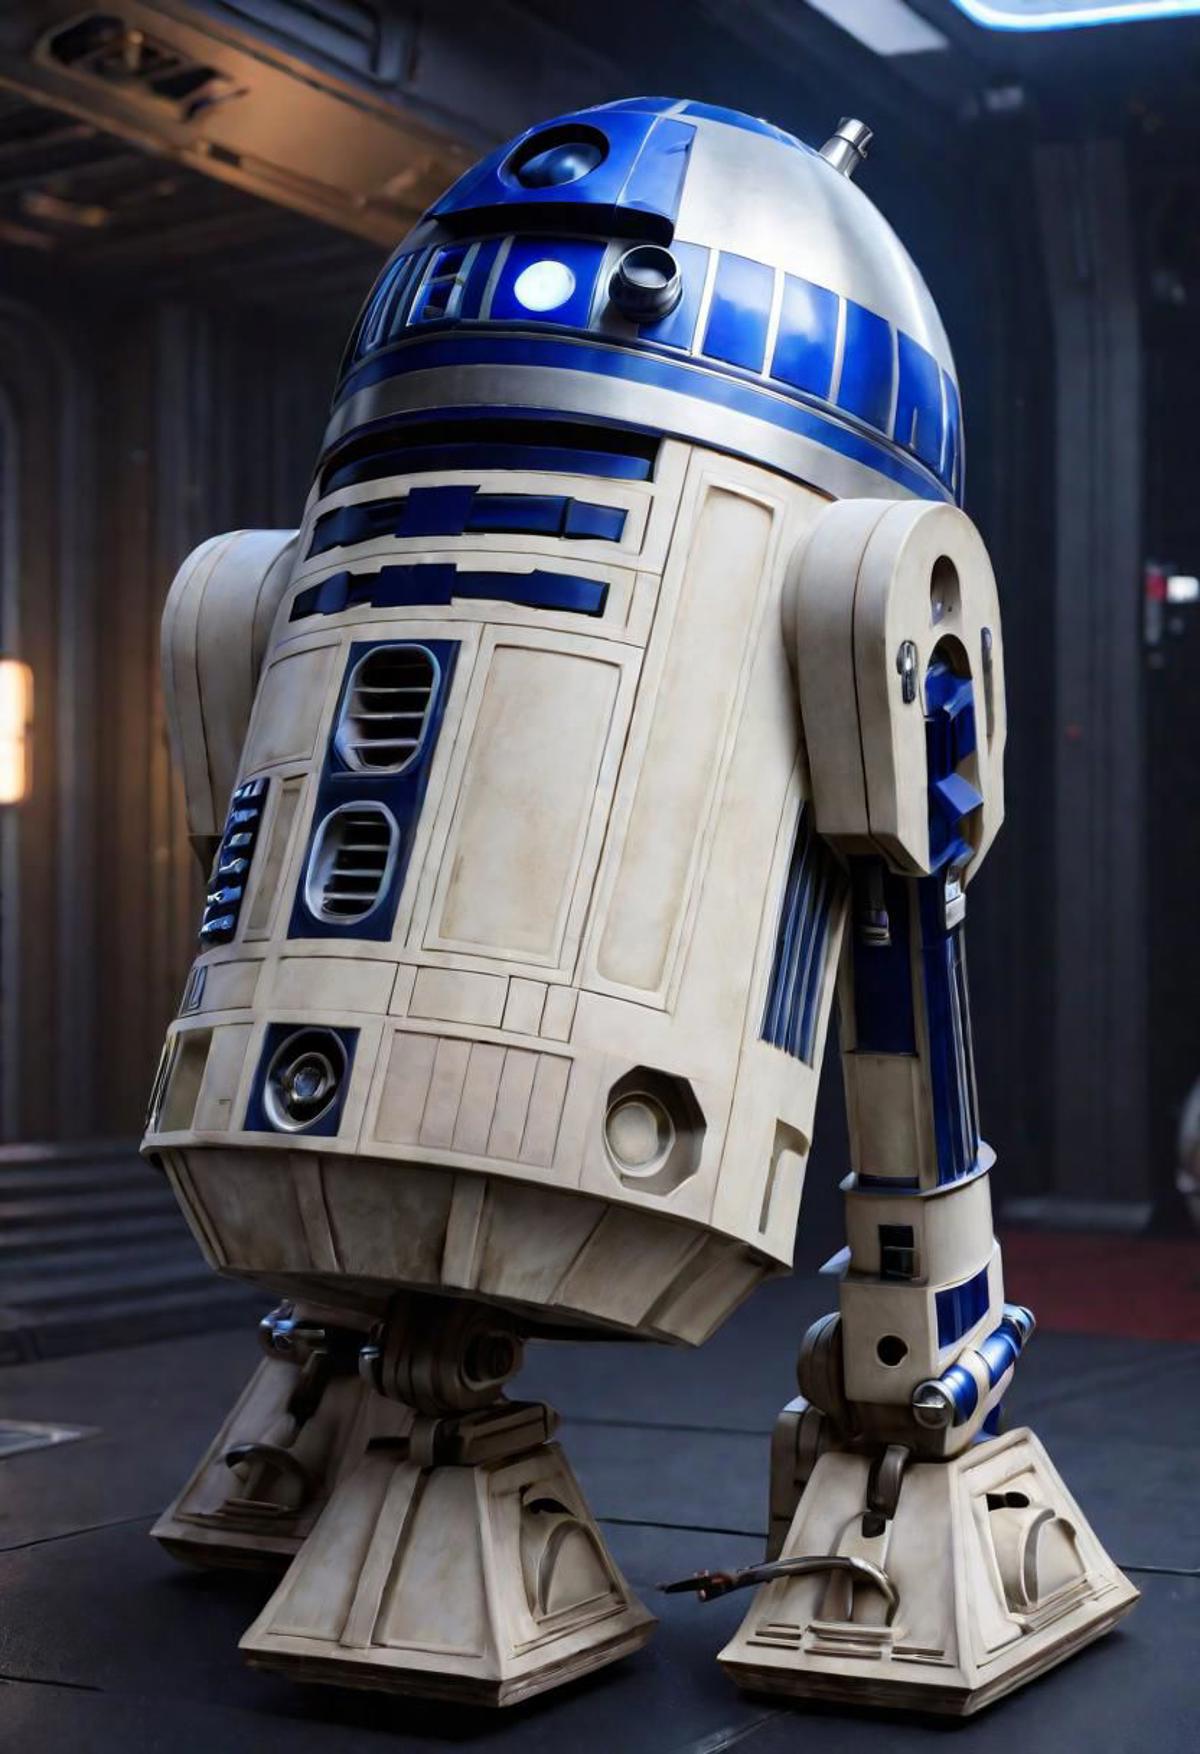 R2-D2 - Star Wars - SDXL image by R4dW0lf